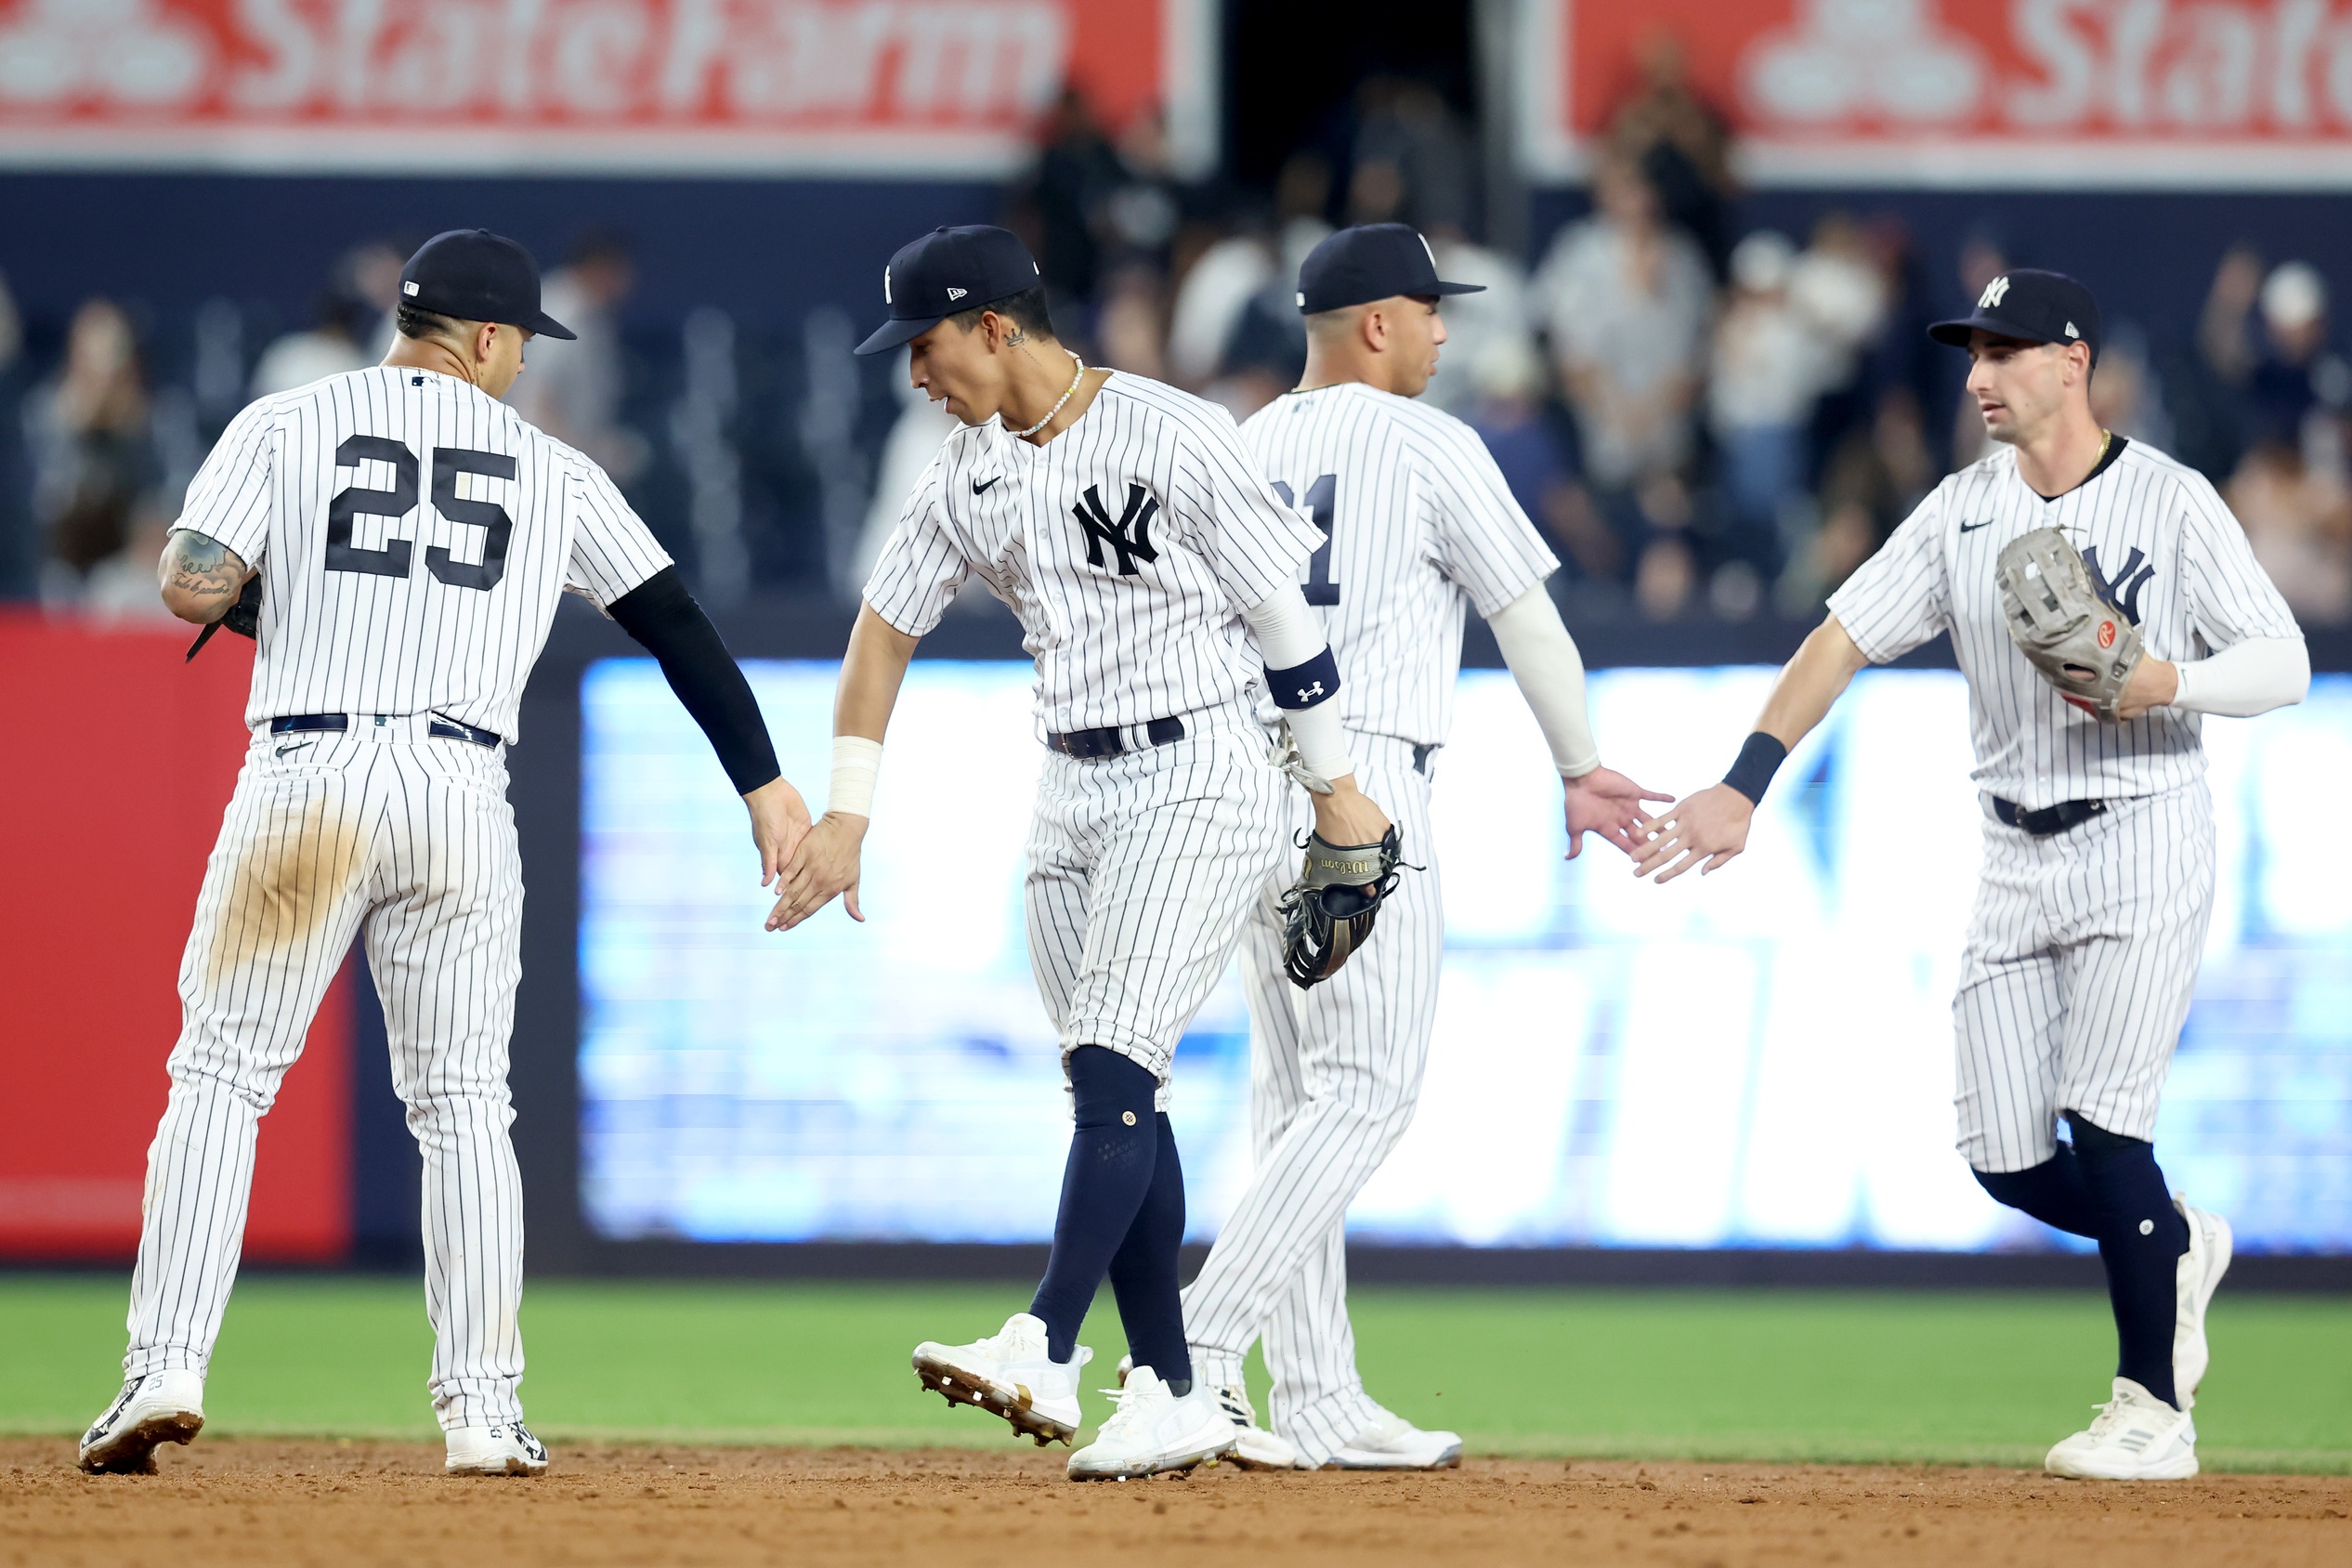 Matt Carpenter Could Return to New York Yankees Before Postseason - Sports  Illustrated NY Yankees News, Analysis and More